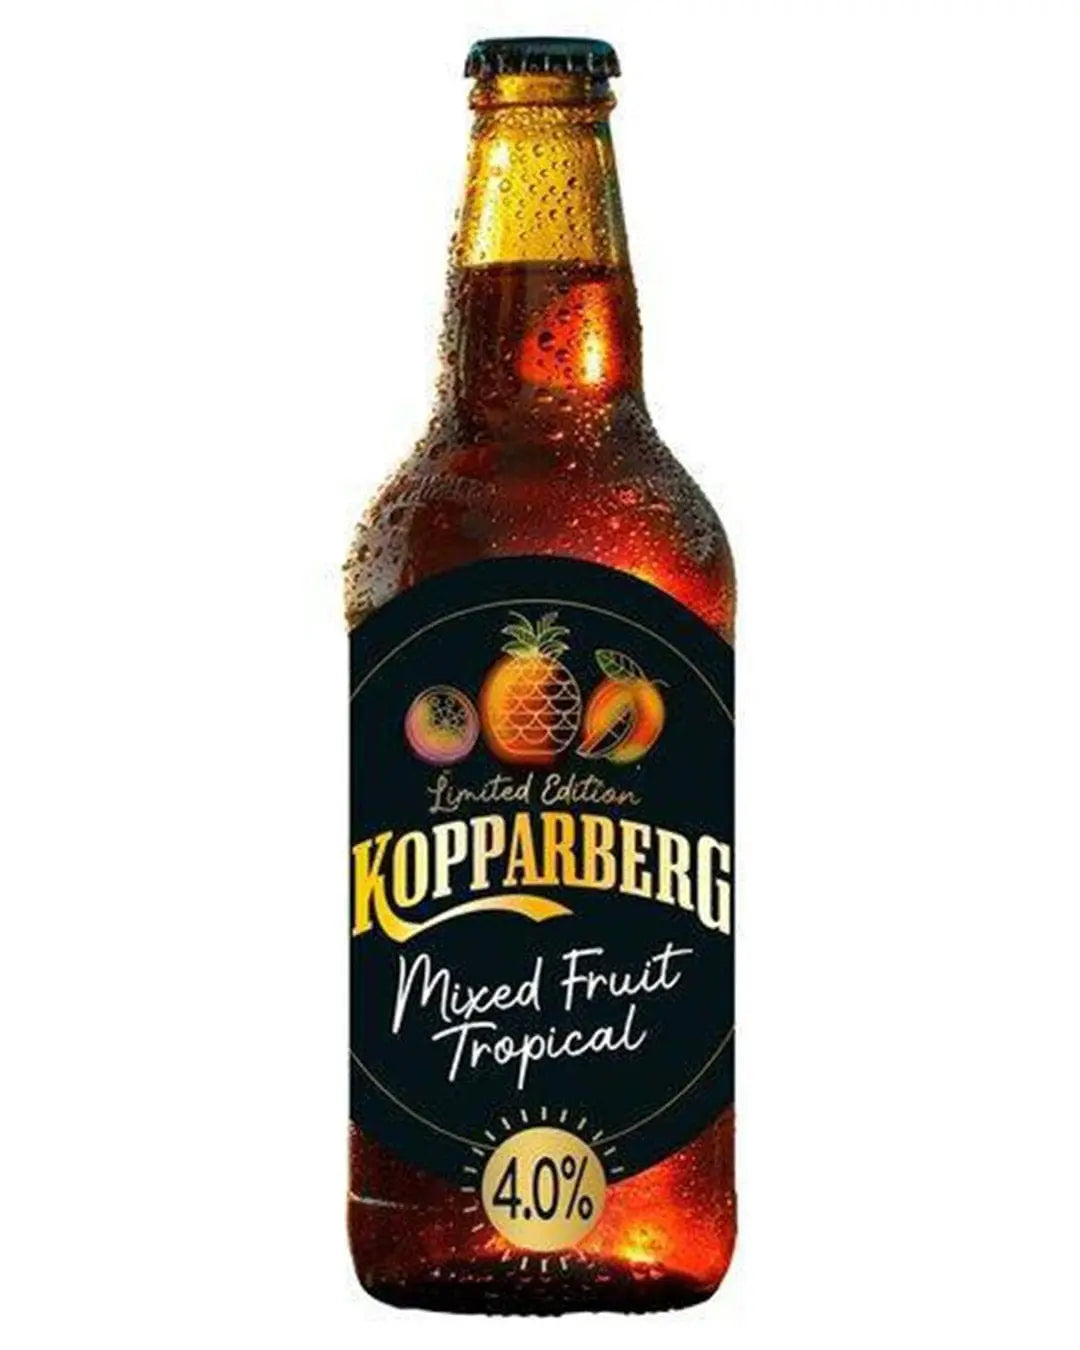 Kopparberg Mixed Fruit Tropical Premium Cider, 500 ml Cider